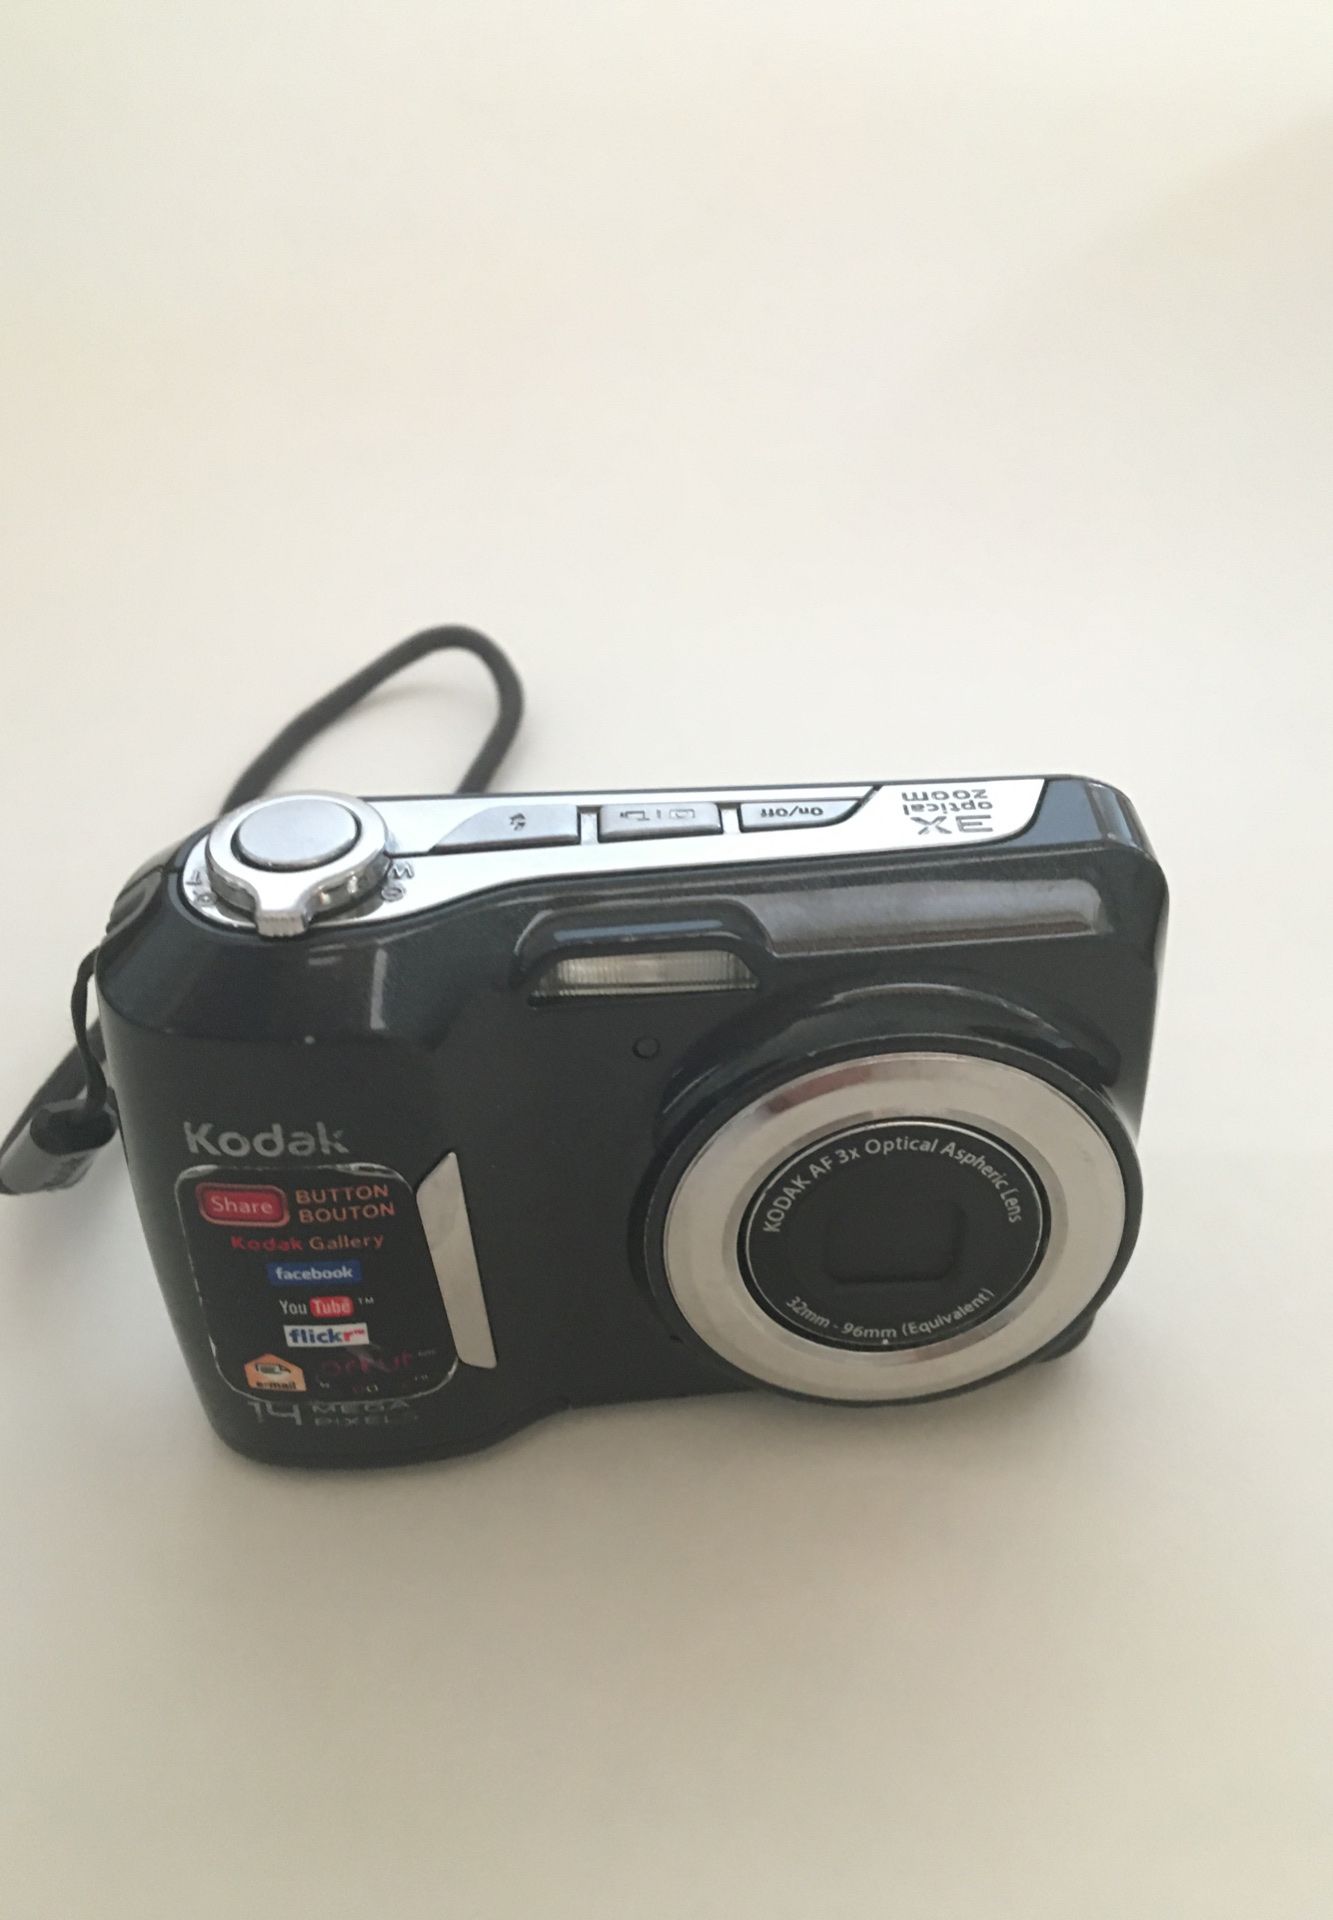 Kodak EasyShare CD83 Digital Camera 14 megapixel Point and Shoot / Camara digital para fotos